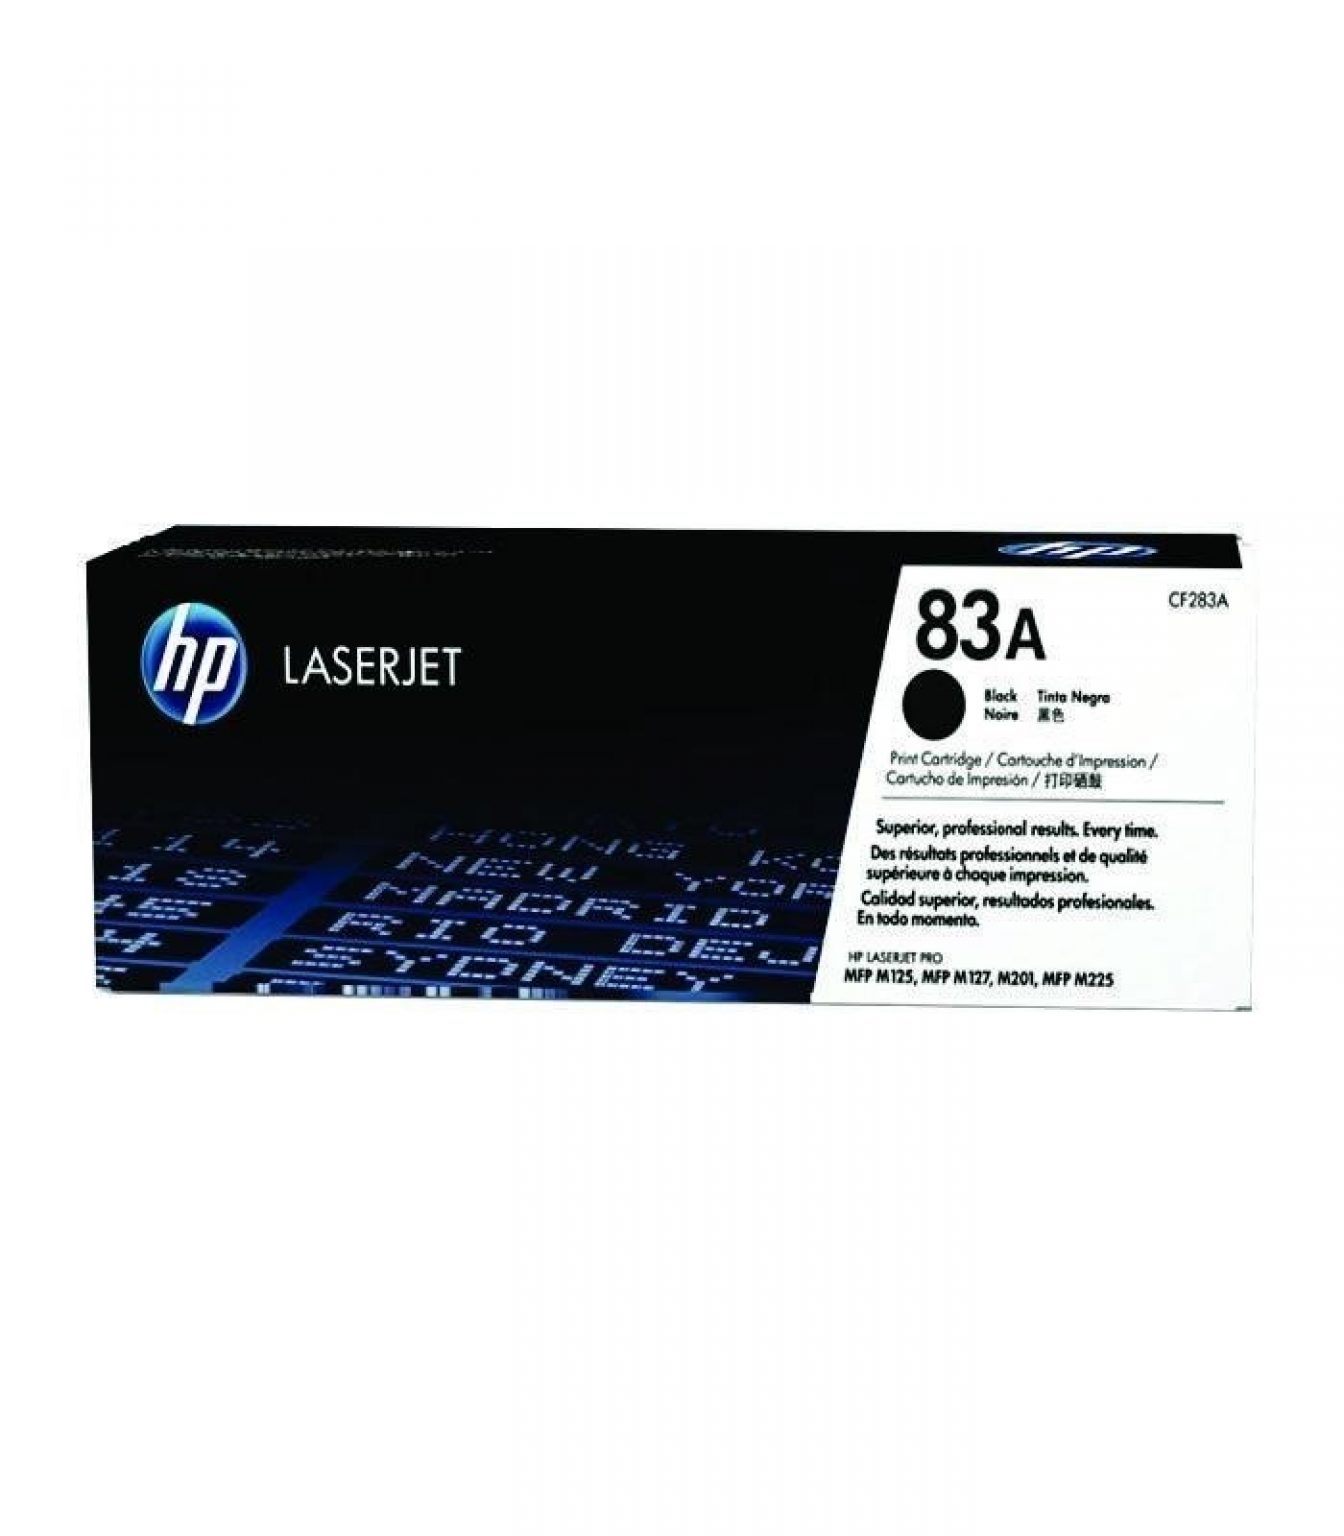 HP - LaserJet 83A Black Toner Cartridge [CF283A]